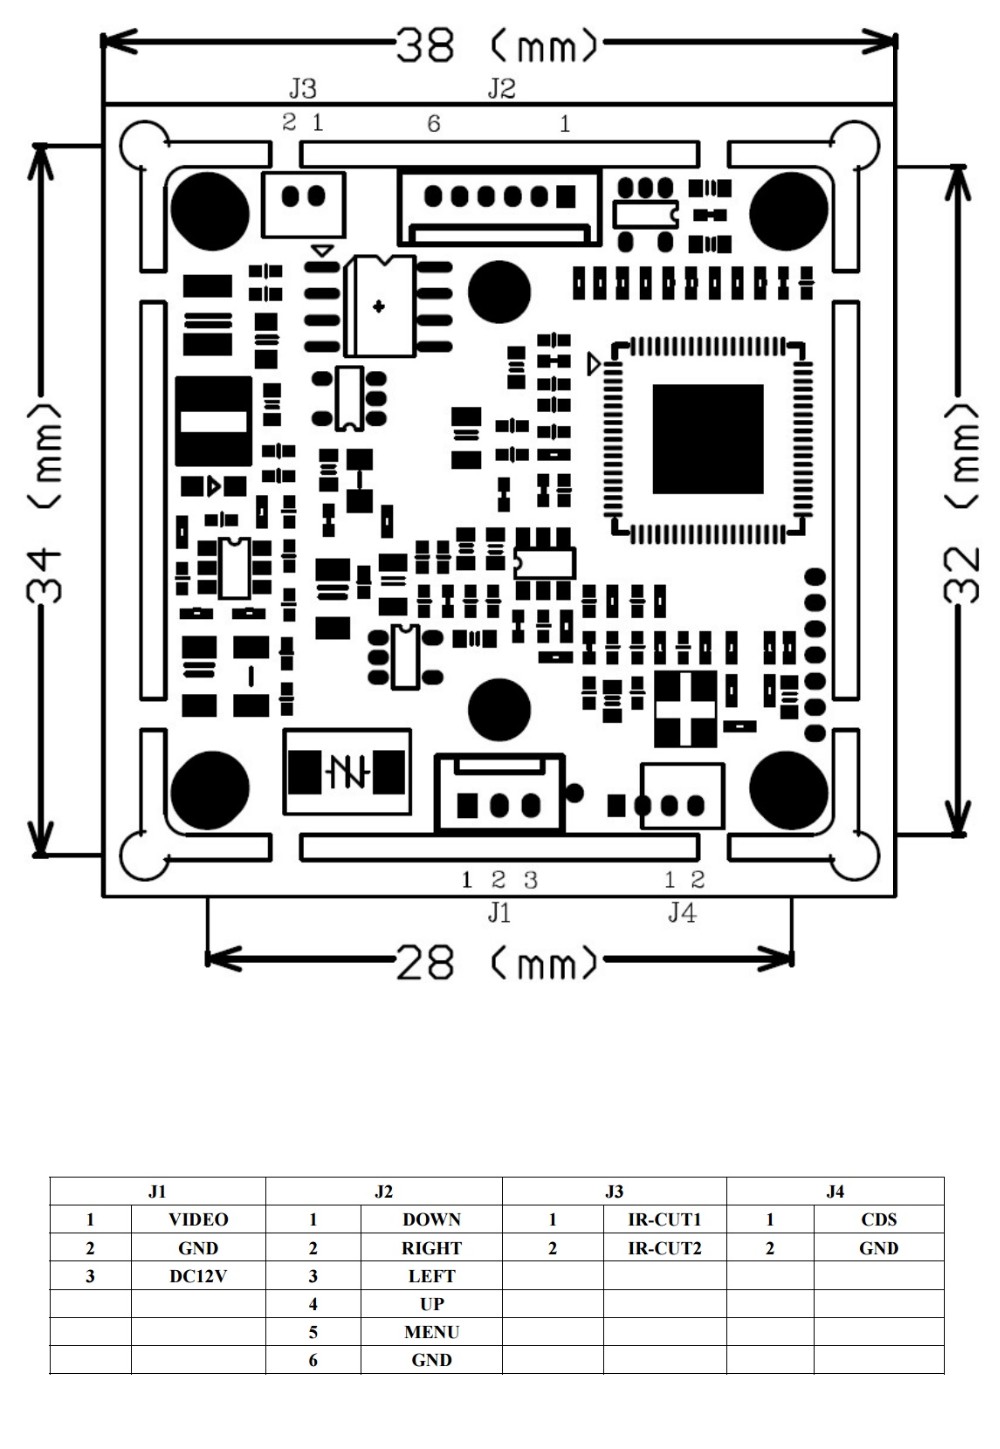 1 4 H42 + HDI8901 CMOS BOARD 1.0 MegaPixel 4 in 1 AHD CVI TVI 2.0 Analog FOR CCTV AHD CAMERA